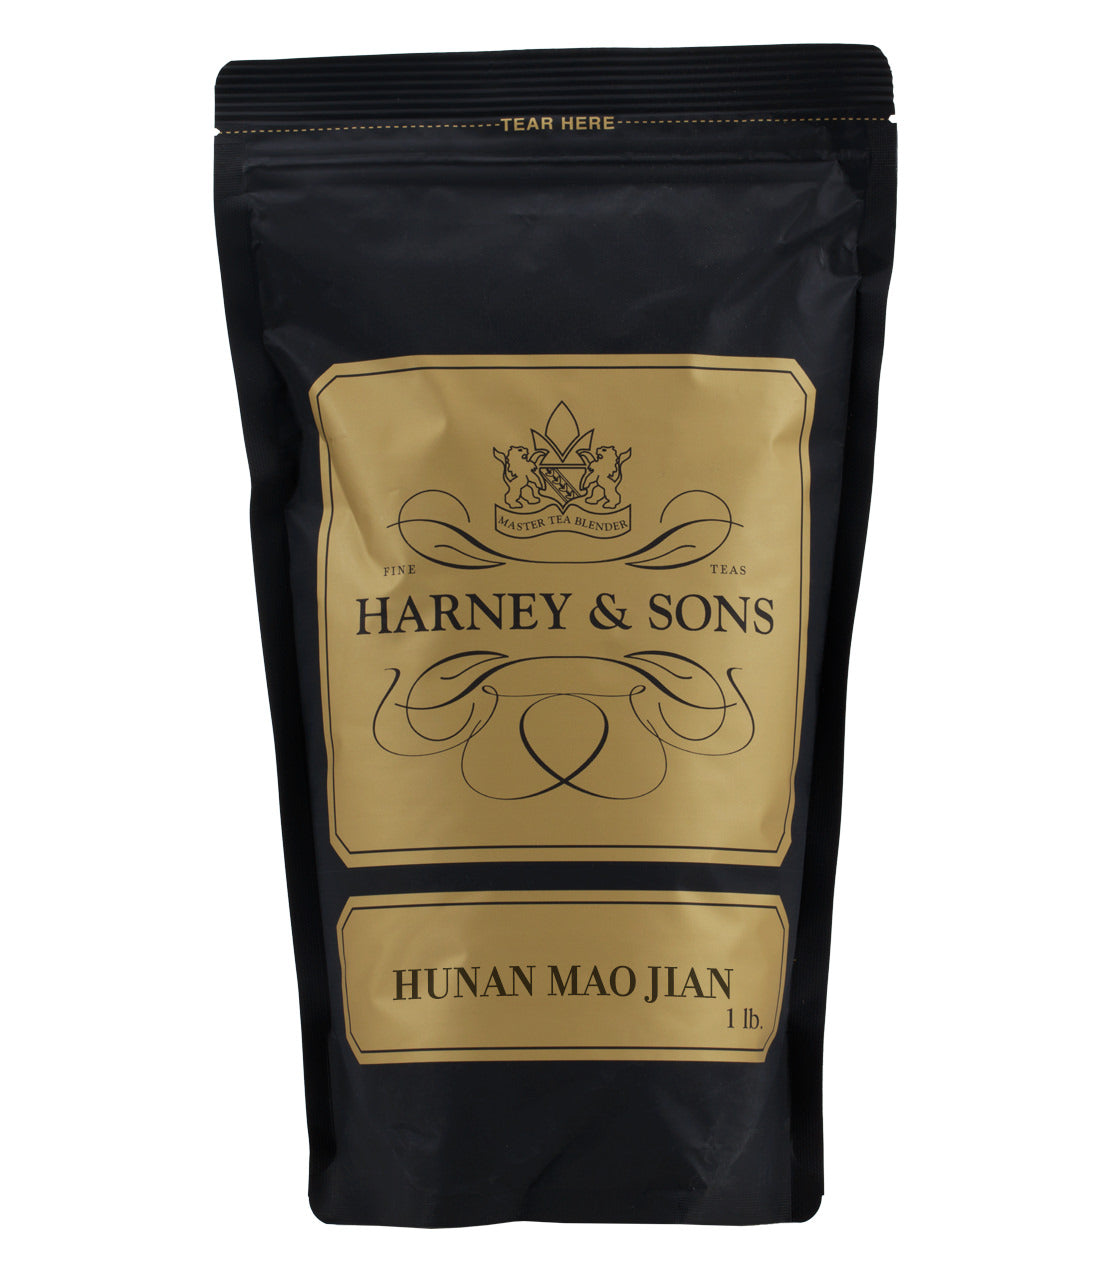 Hunan Mao Jian - Loose 1 lb. Bag - Harney & Sons Fine Teas